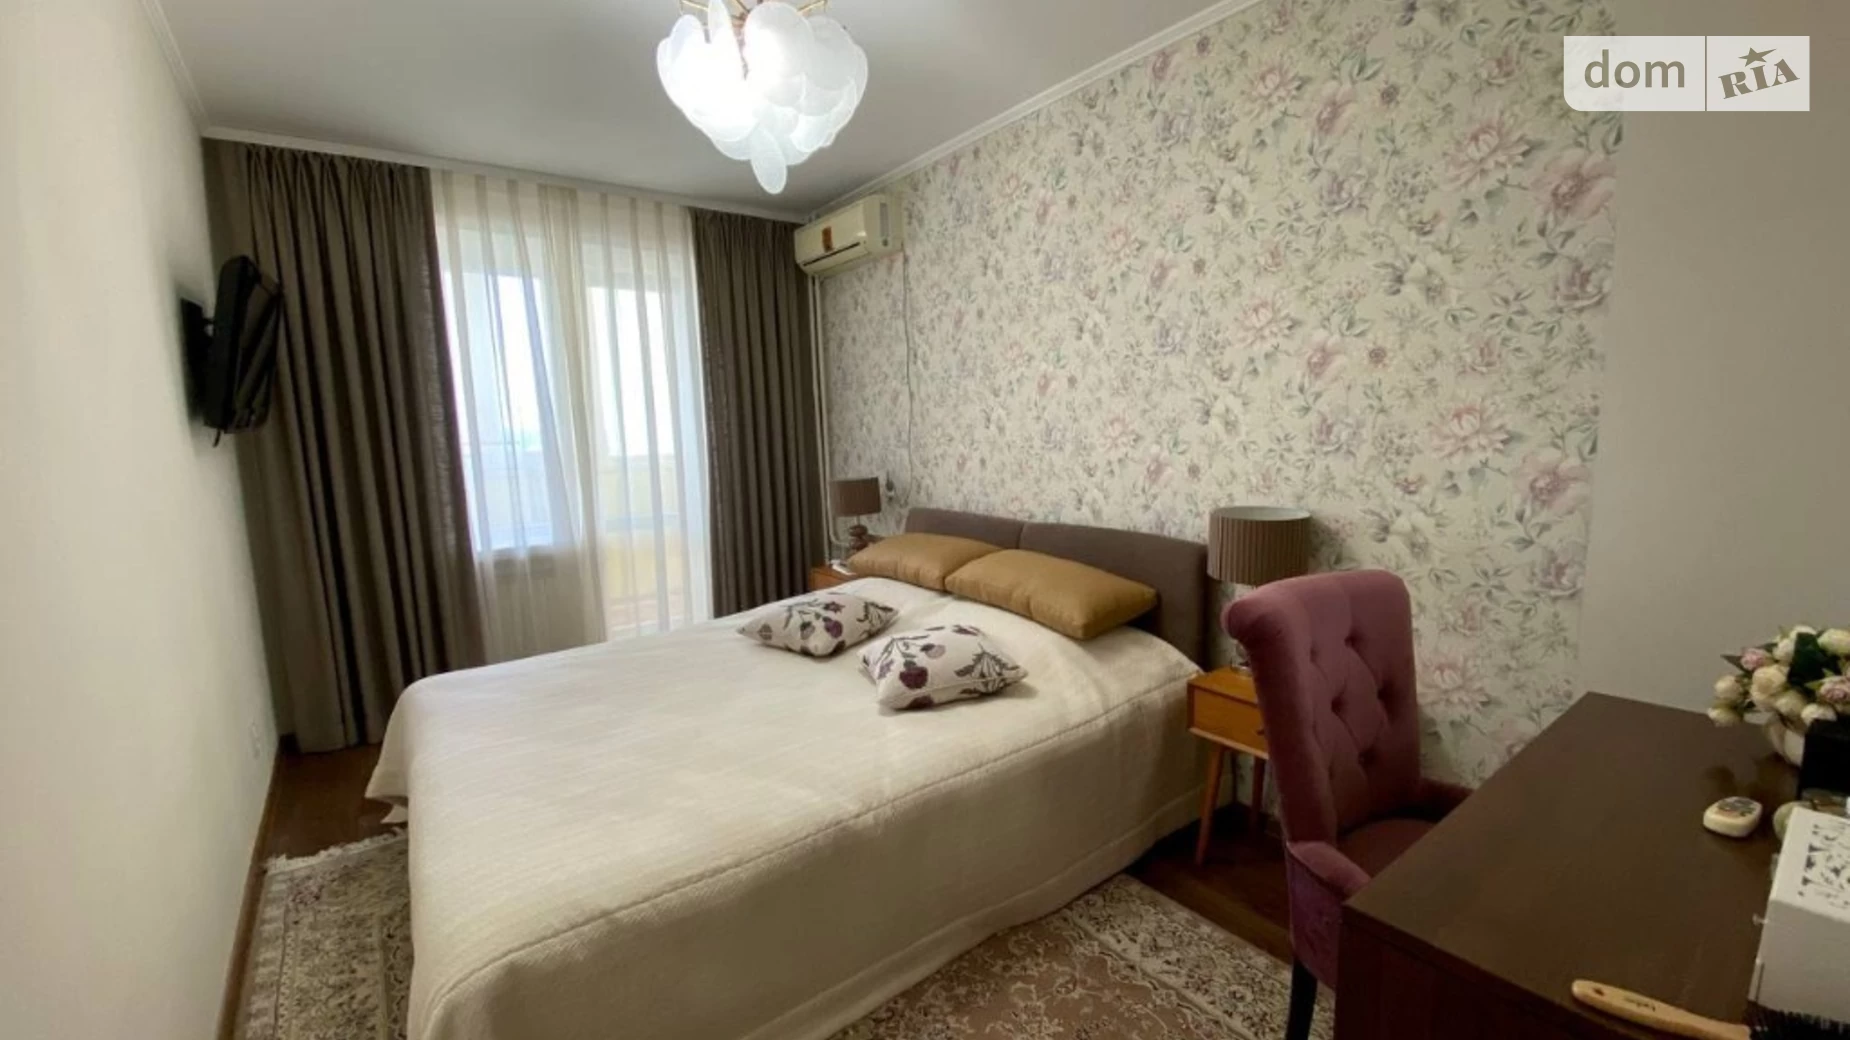 Продається 3-кімнатна квартира 59.7 кв. м у Хмельницькому, вул. Степана Бандери, 49